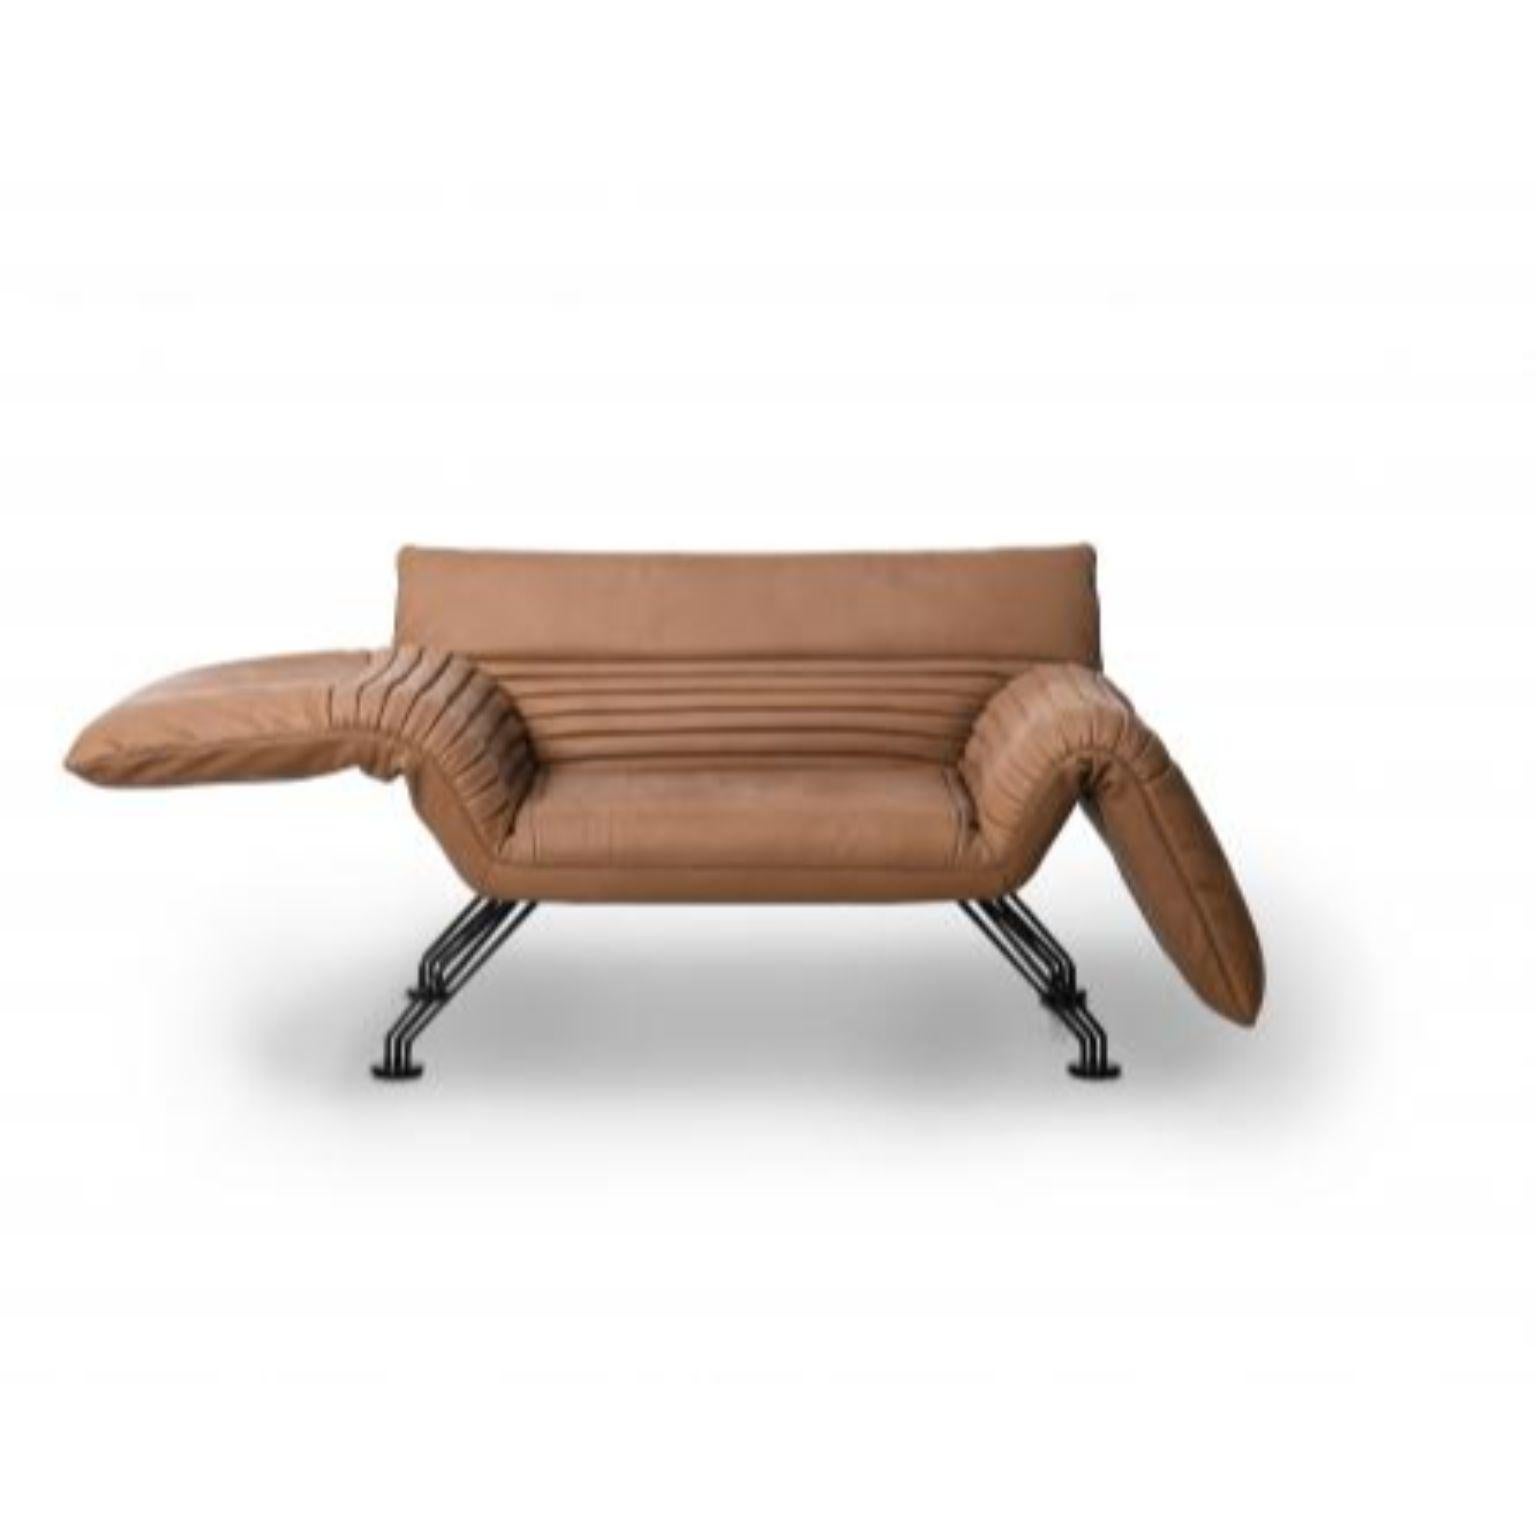 Metal DS-142 Multifunctional Lounge Chair by De Sede